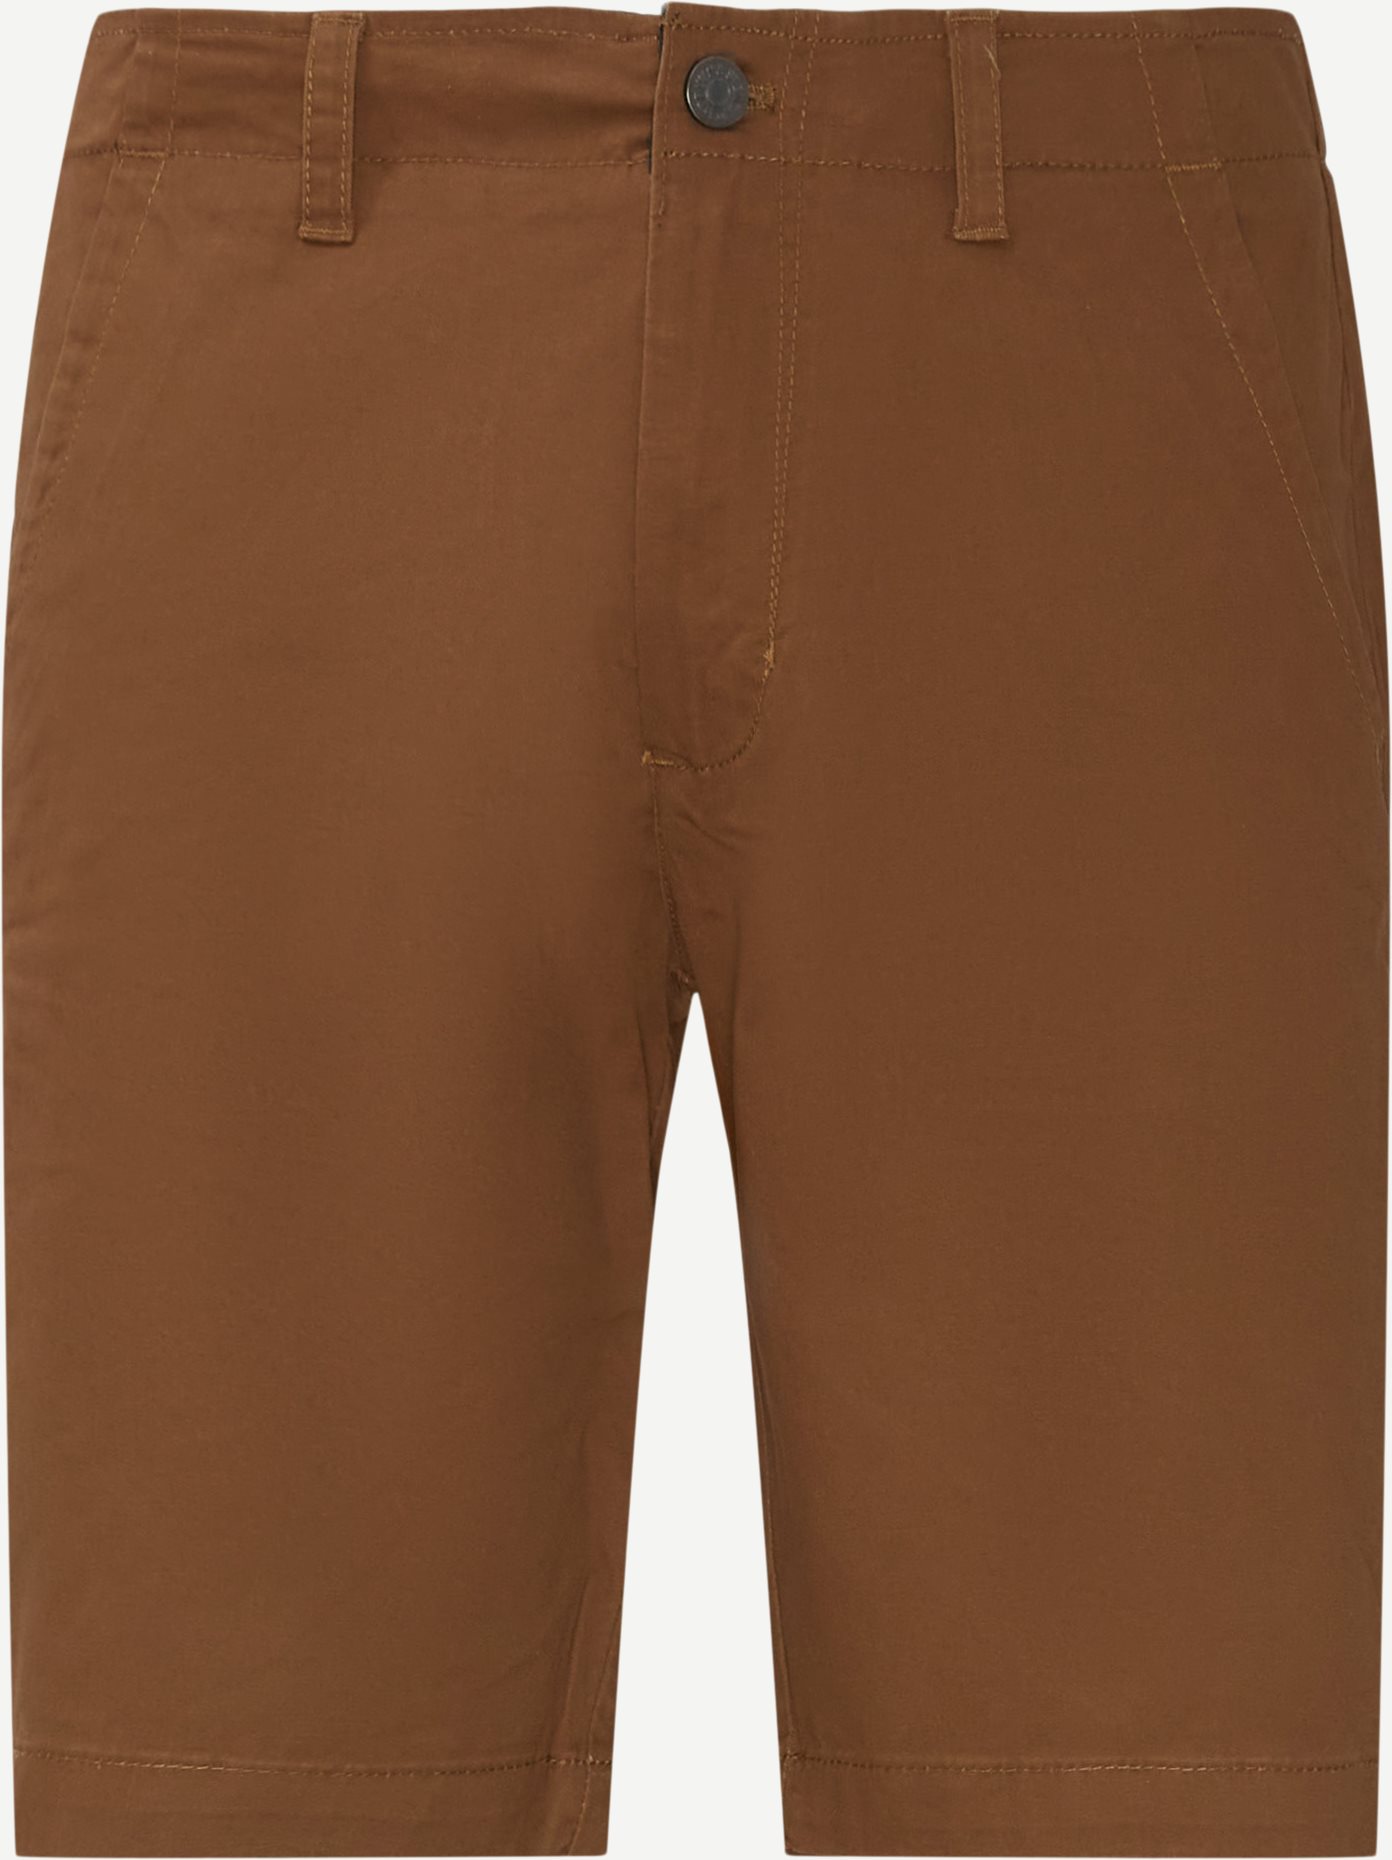 Shorts - Regular fit - Brown